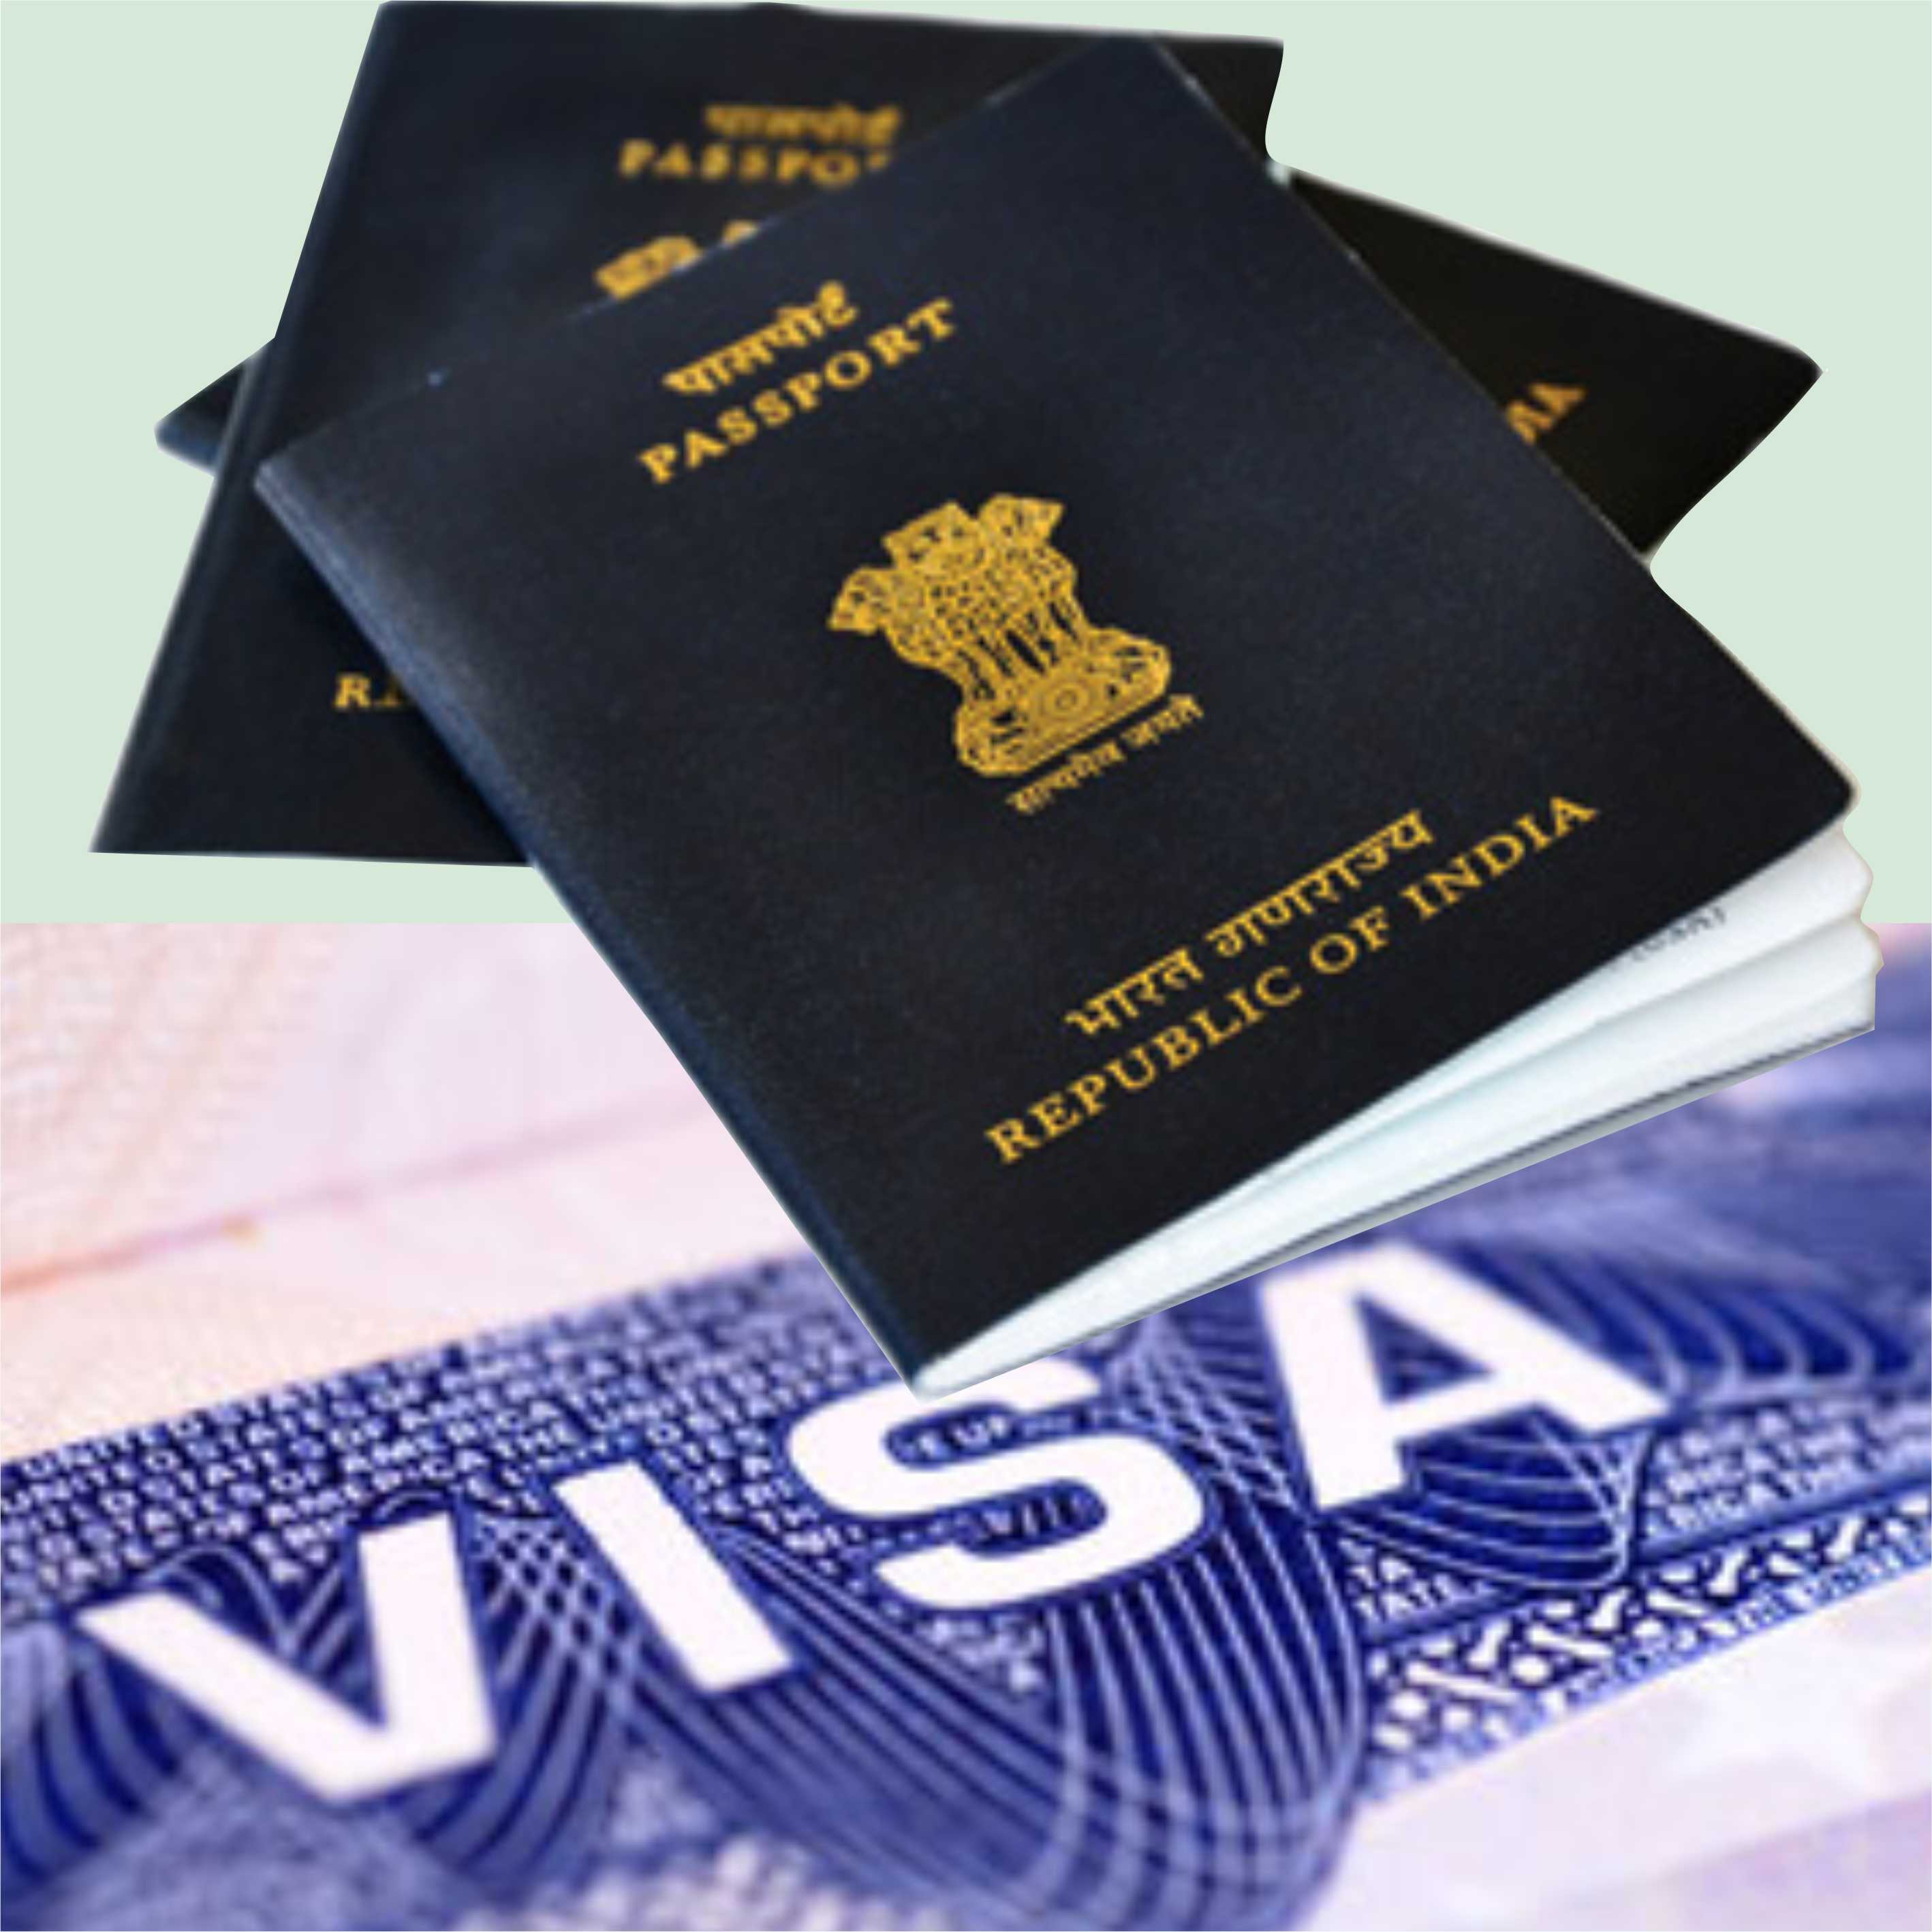 us-visa-for-study-and-work-dr-saheb-sahu-odisha-watch